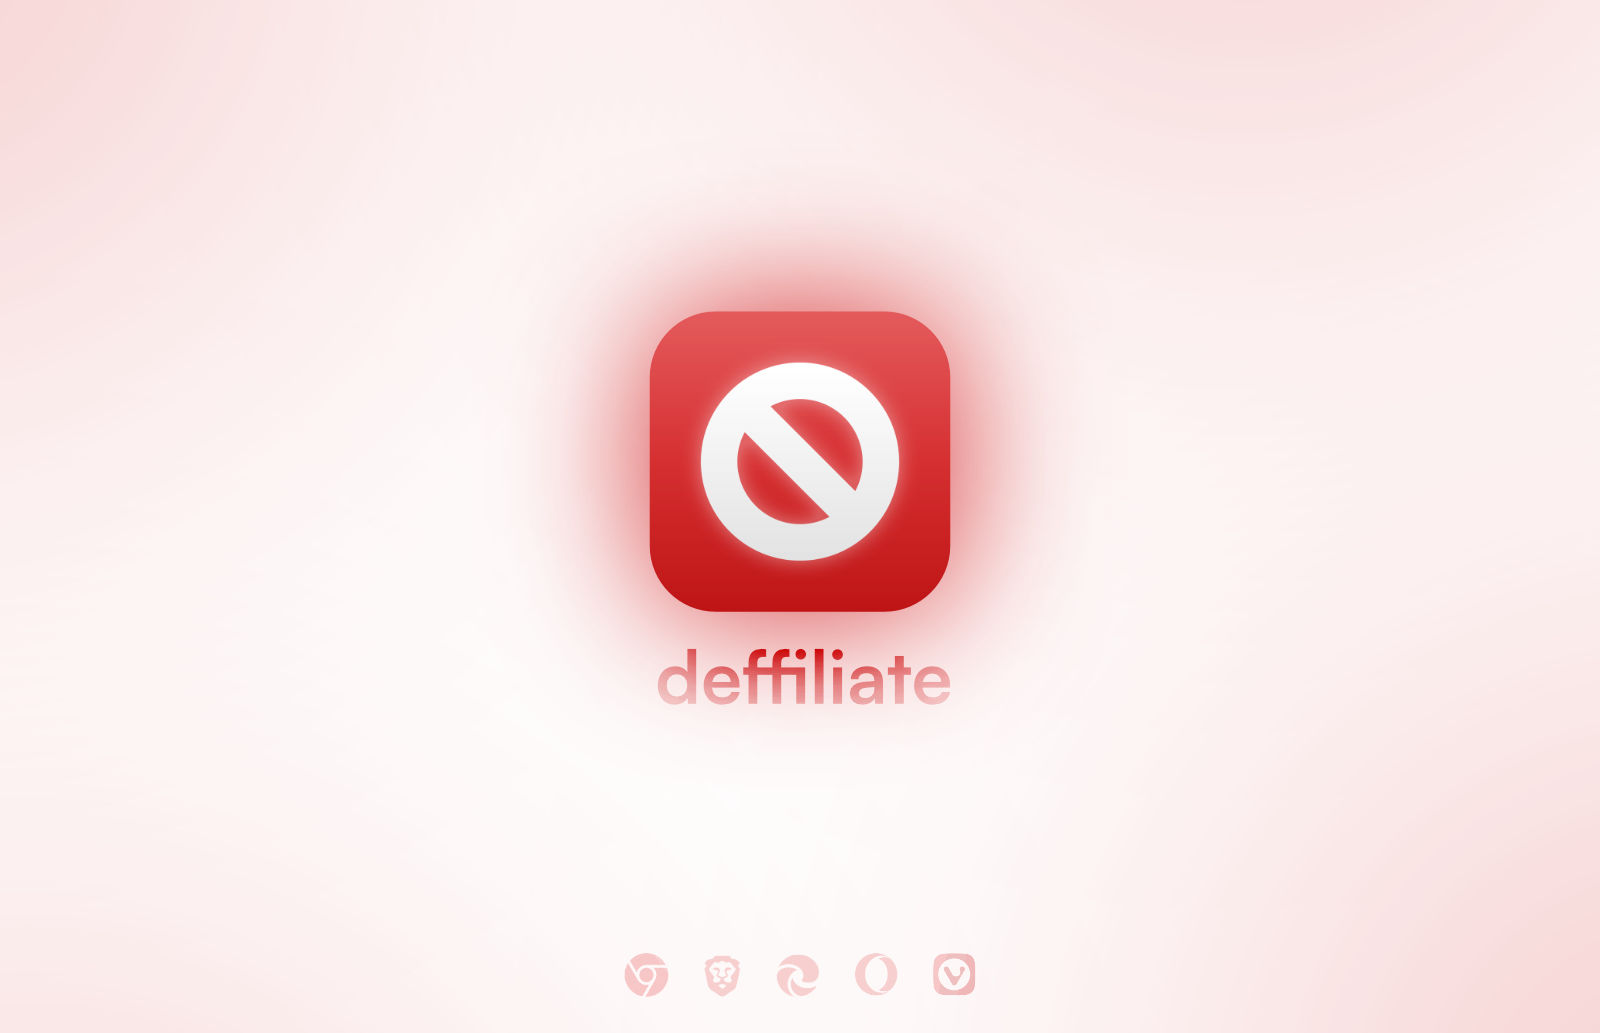 demo_deffiliate.jpg